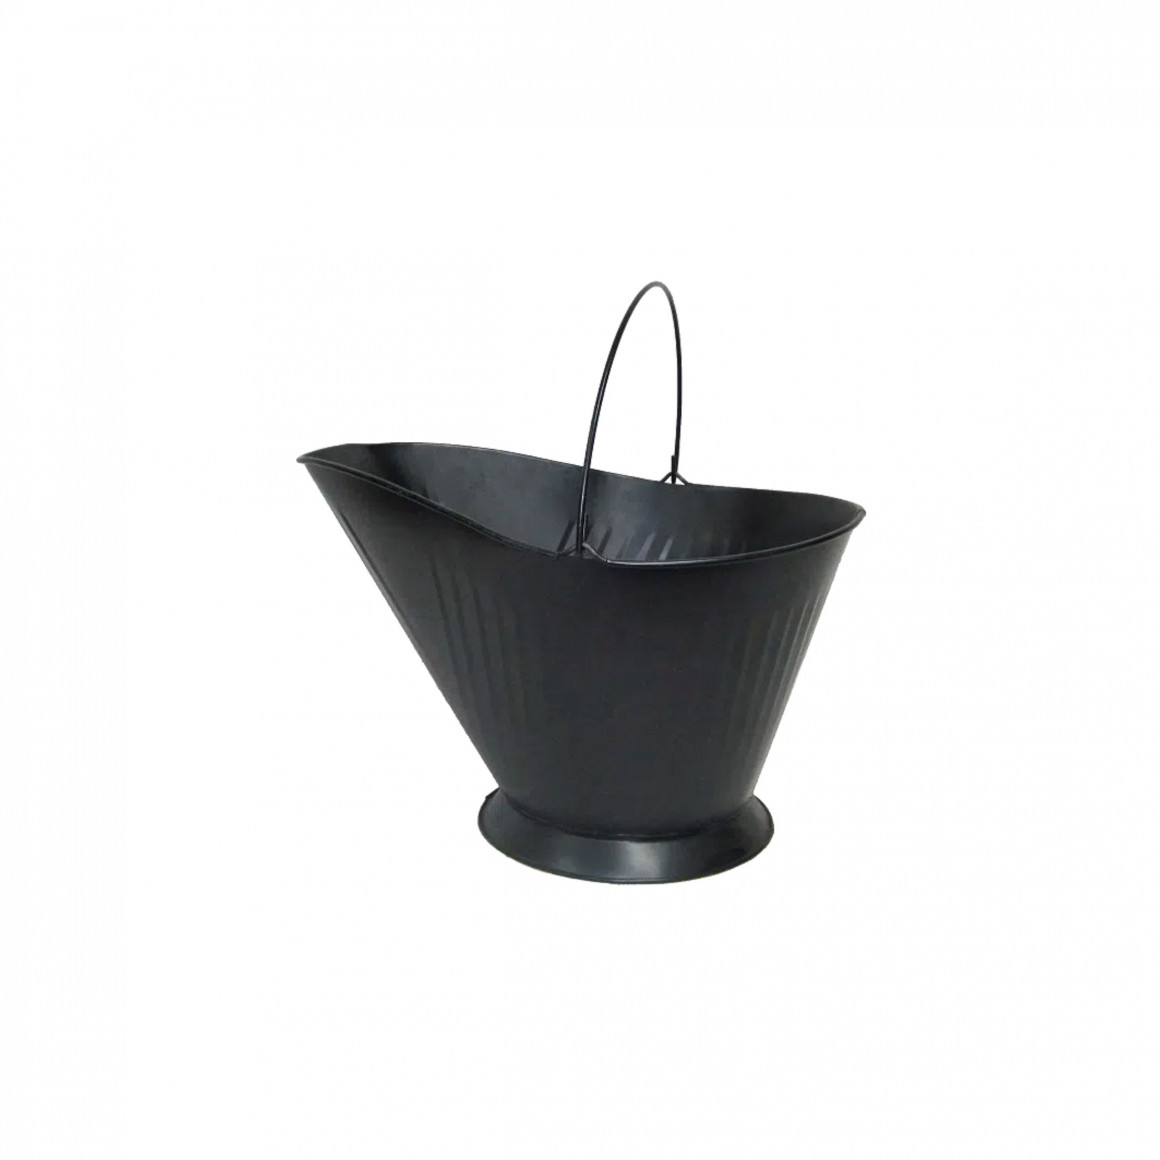 Charcoal bucket steel with black powder